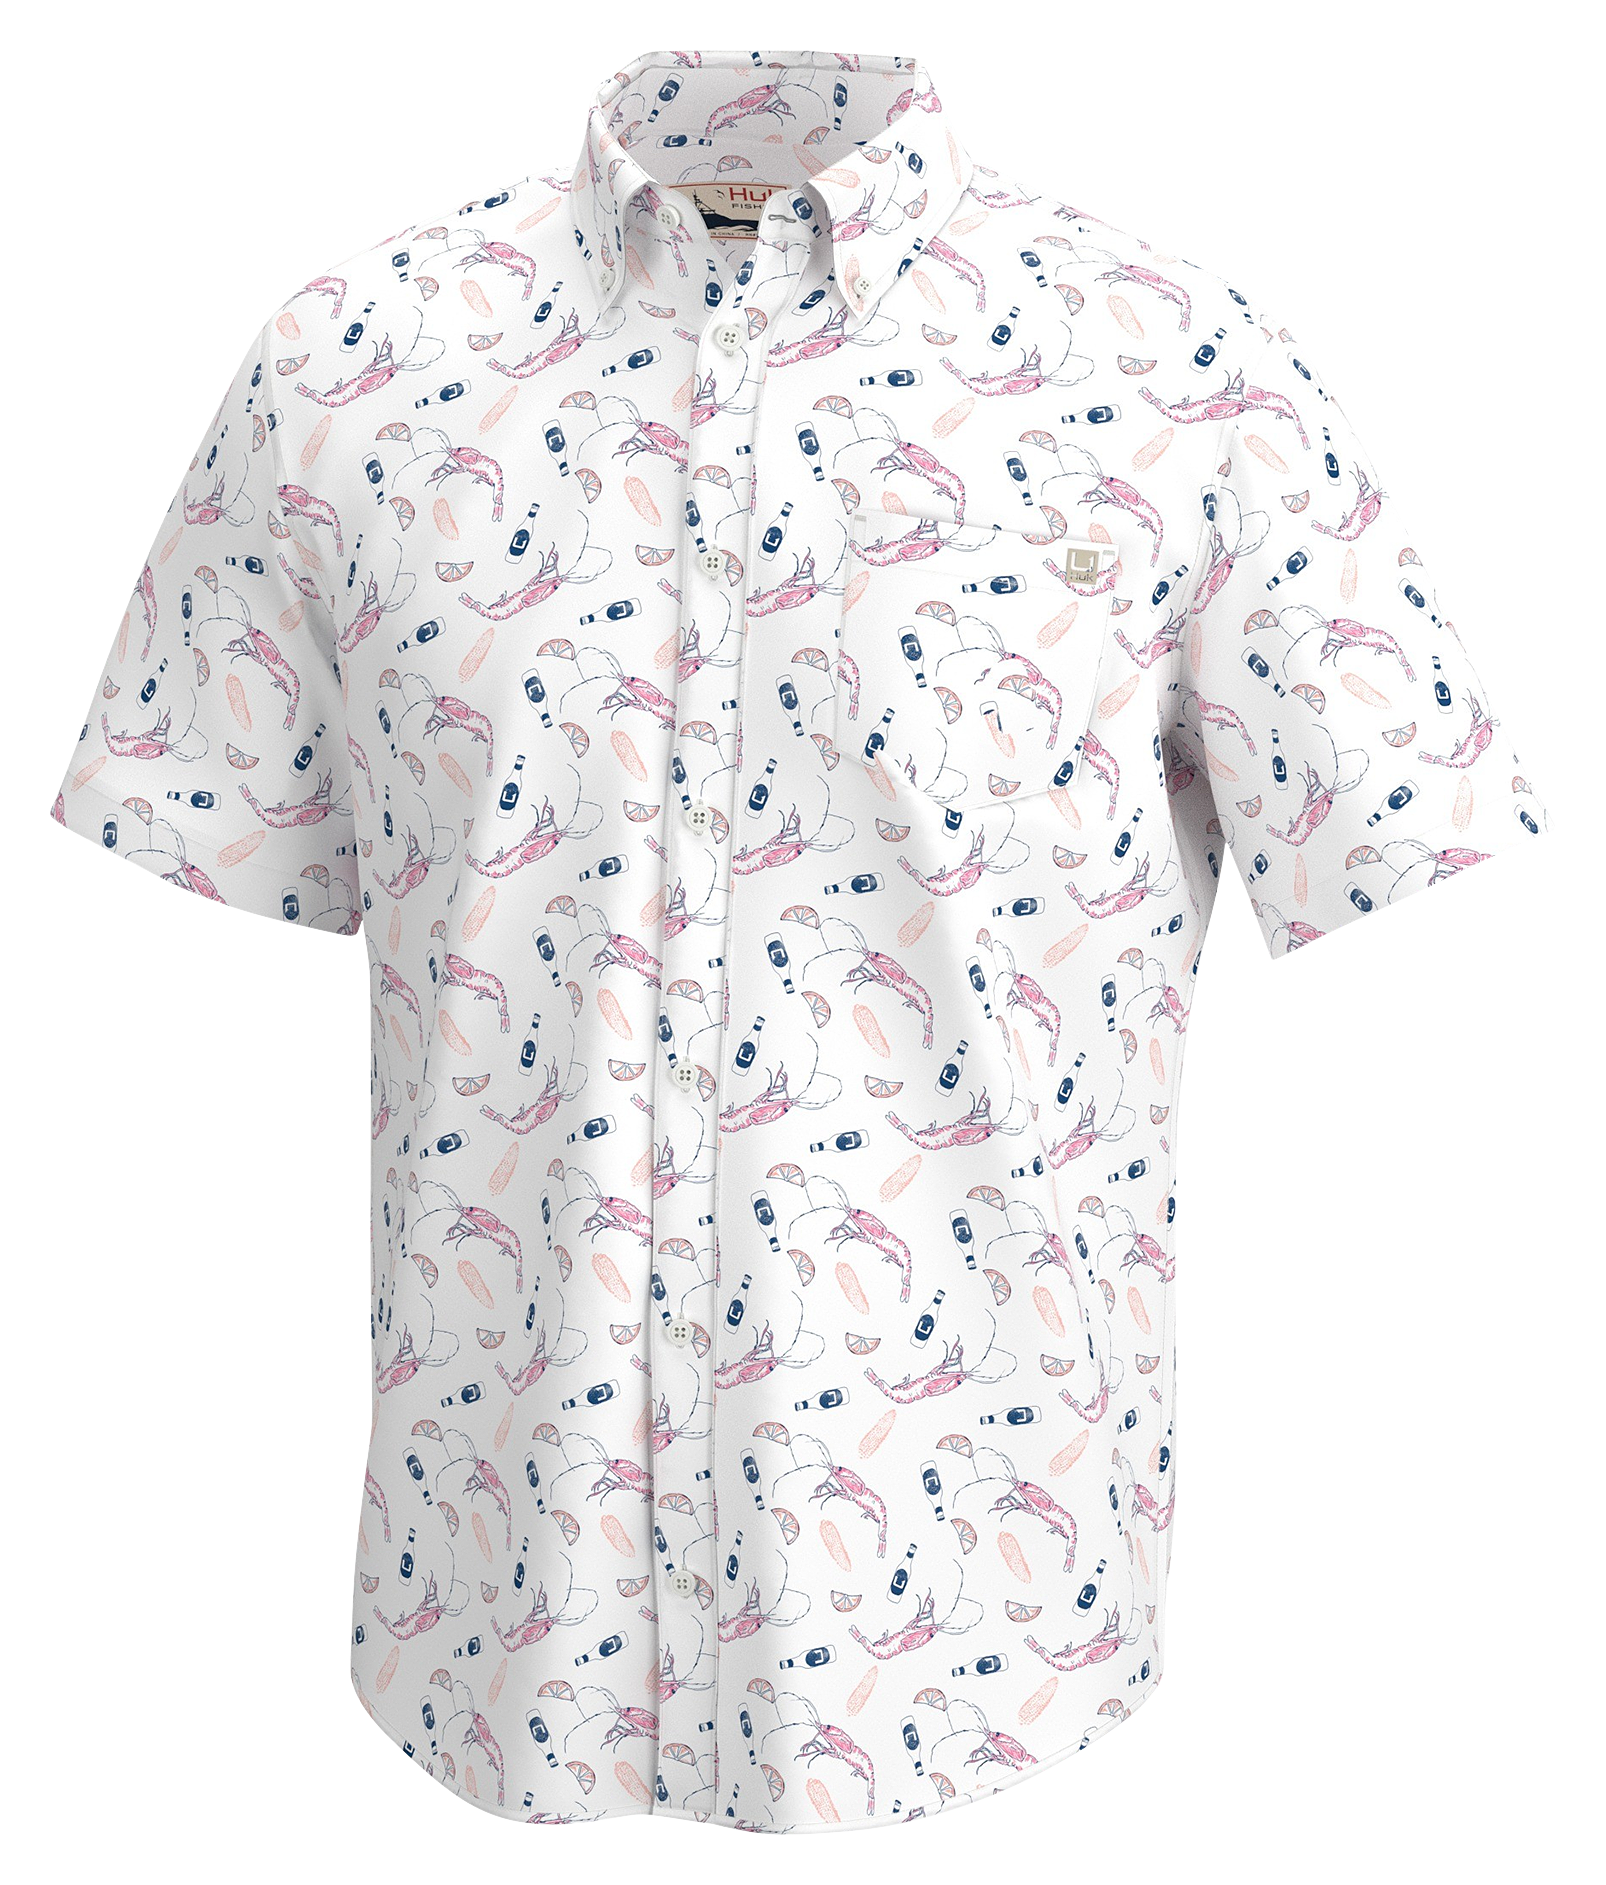 Huk Men's Kona Pattern Short Sleeve Fishing Button Down Shirt